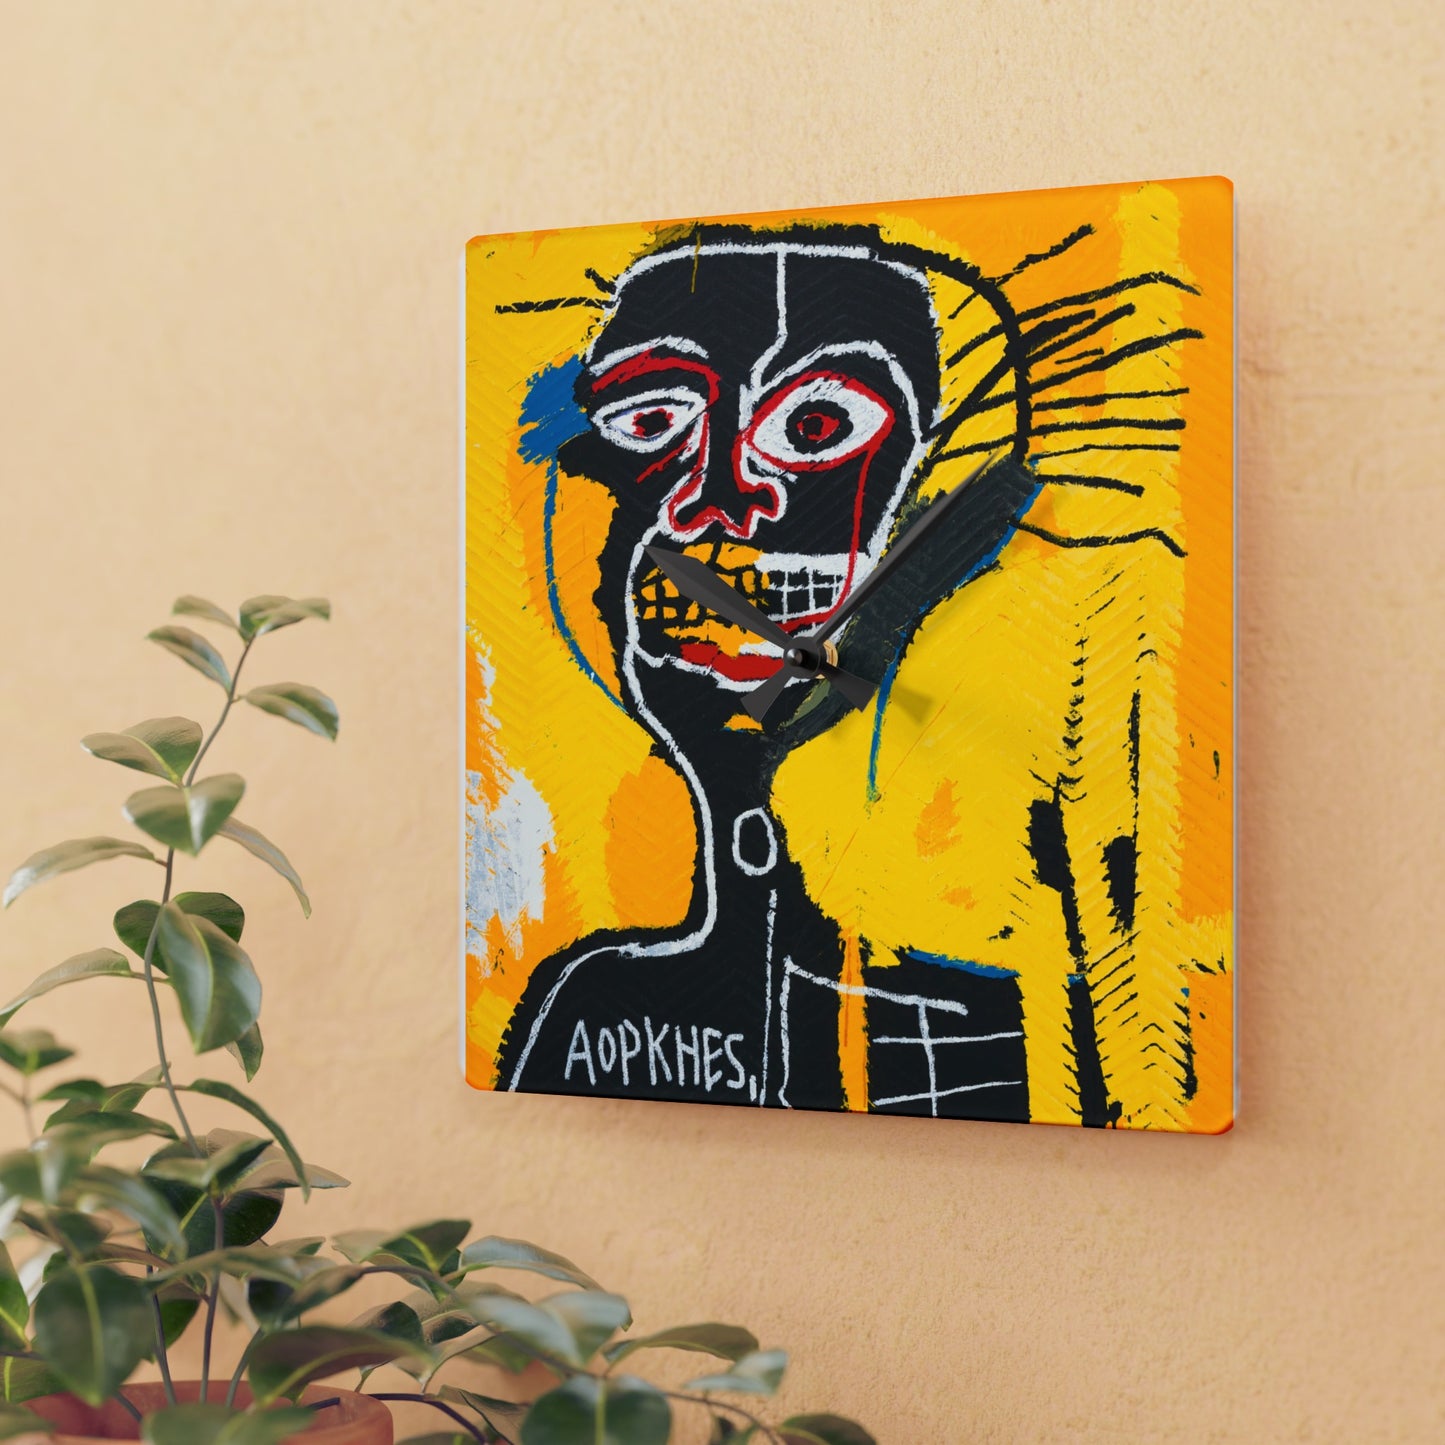 Jean-Michel Basquiat "Cabeza" Artwork Acrylic Wall Clock